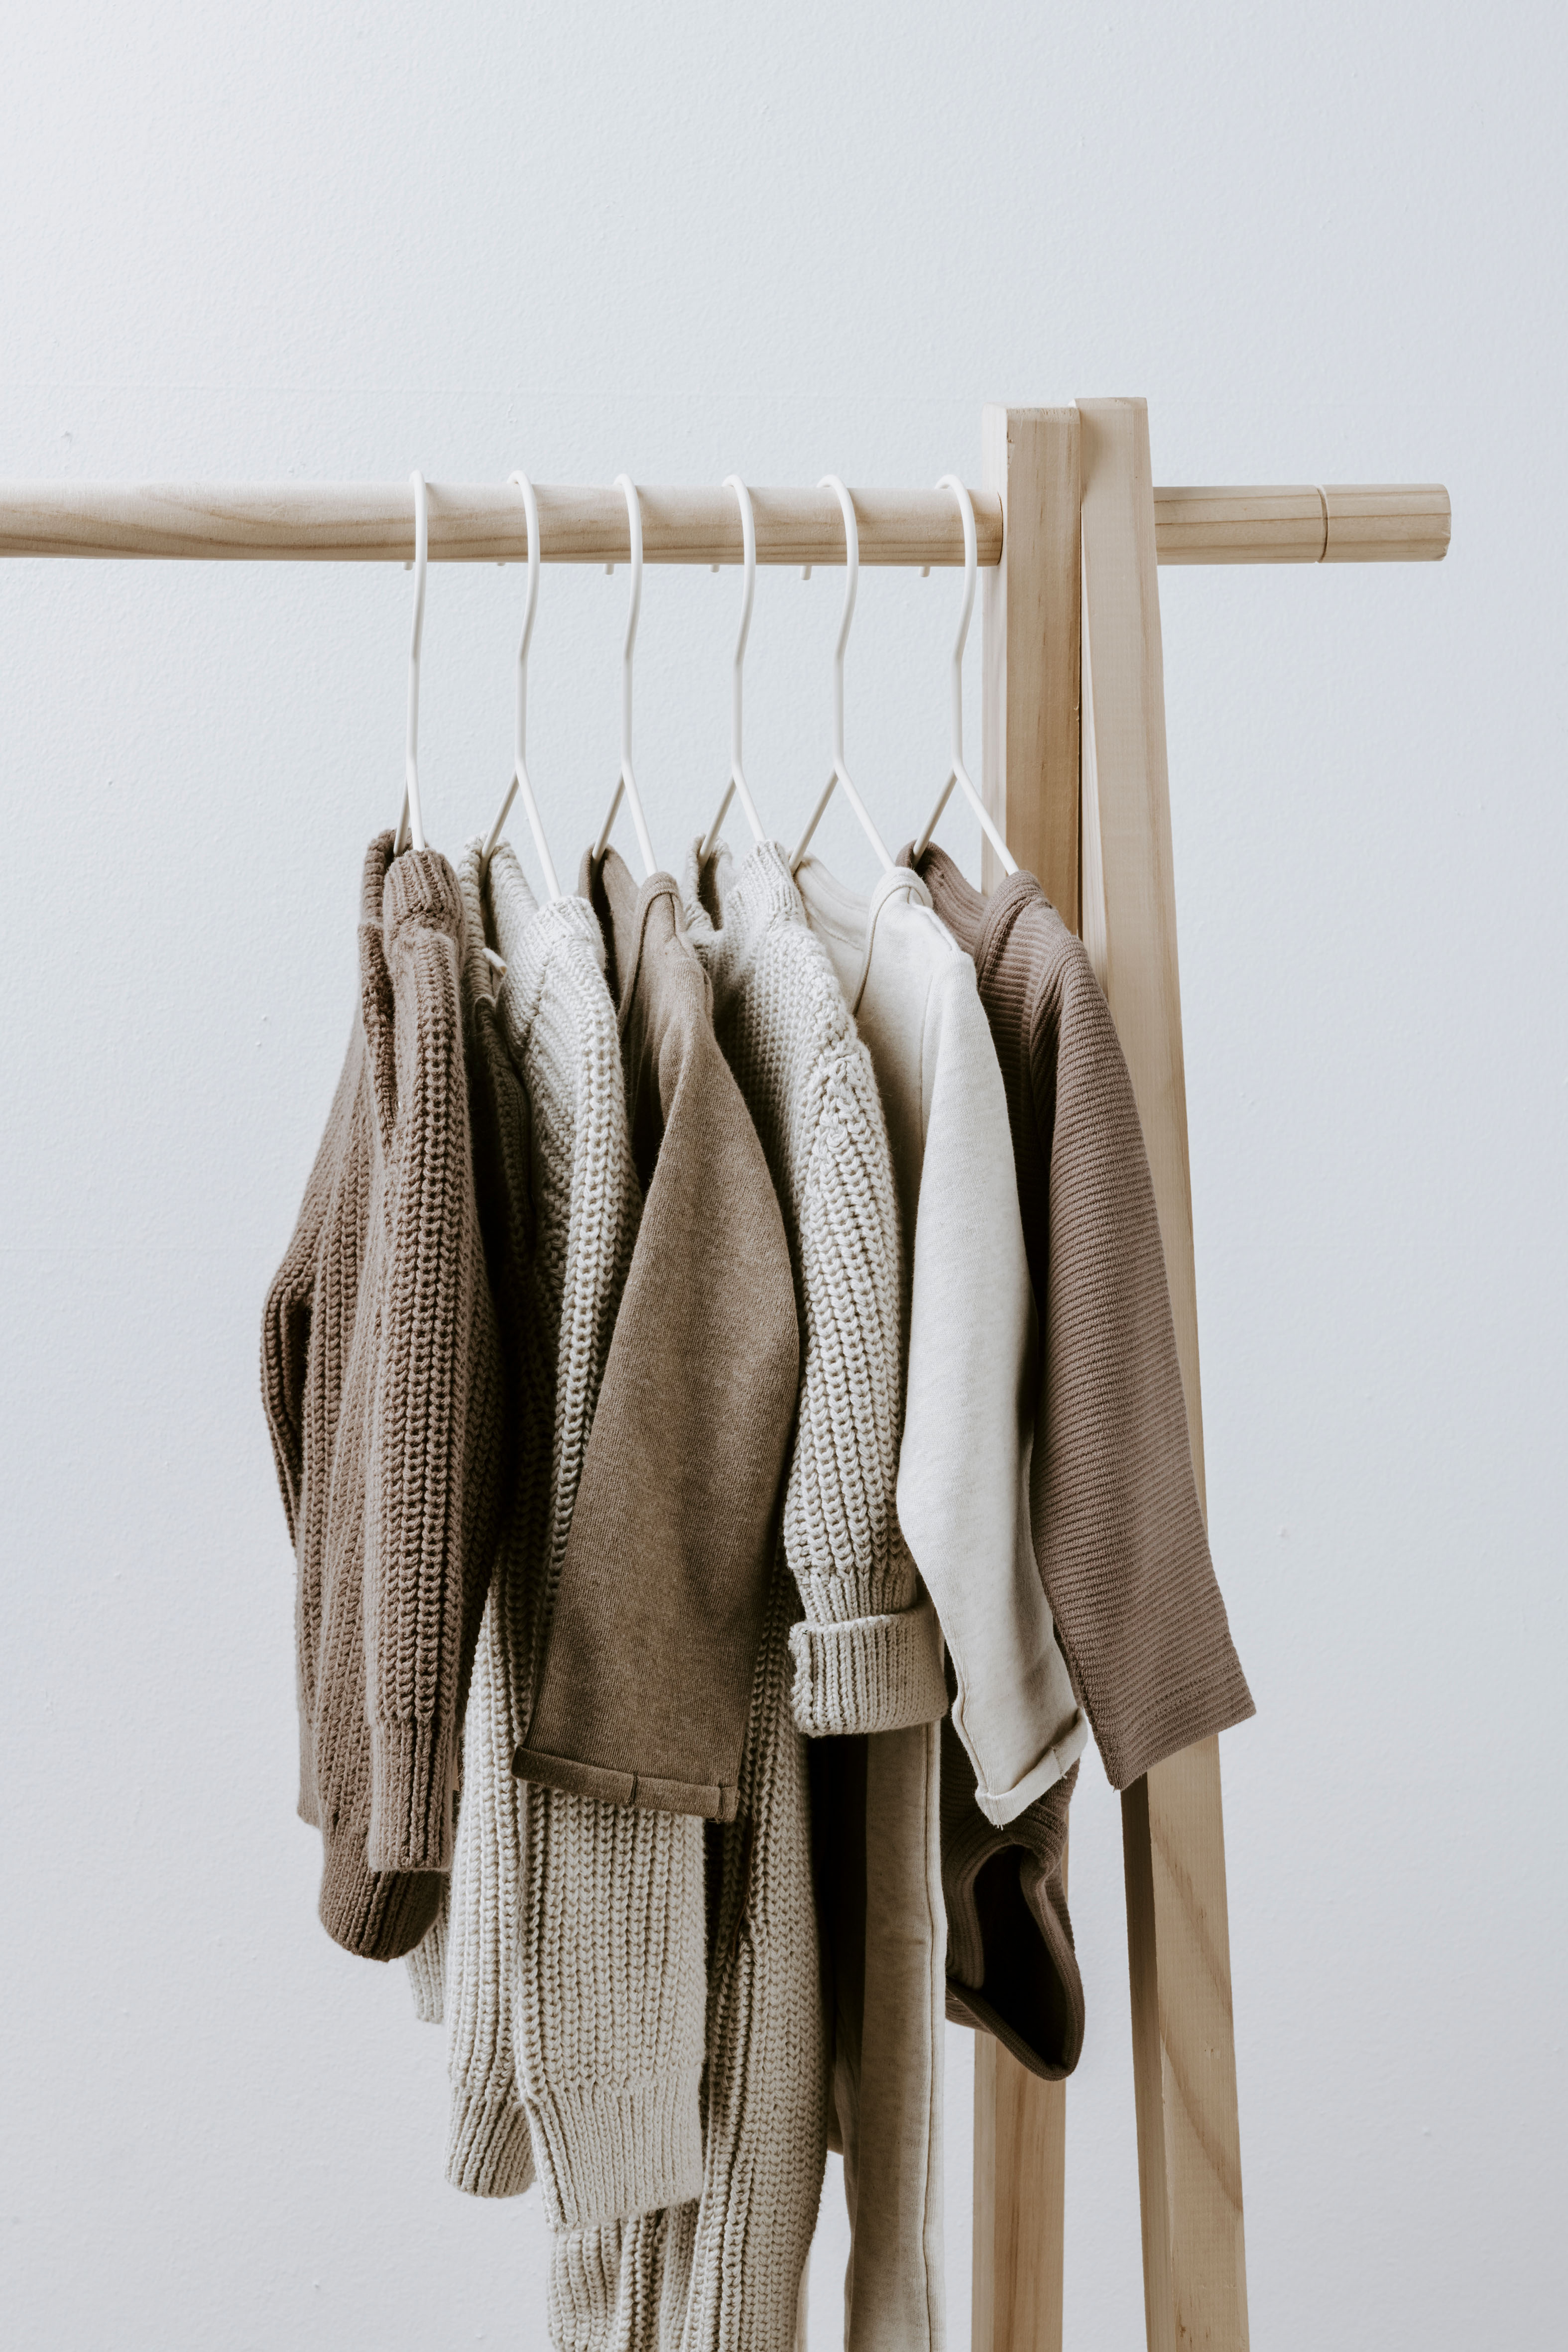 Sweater Melange grey - 56